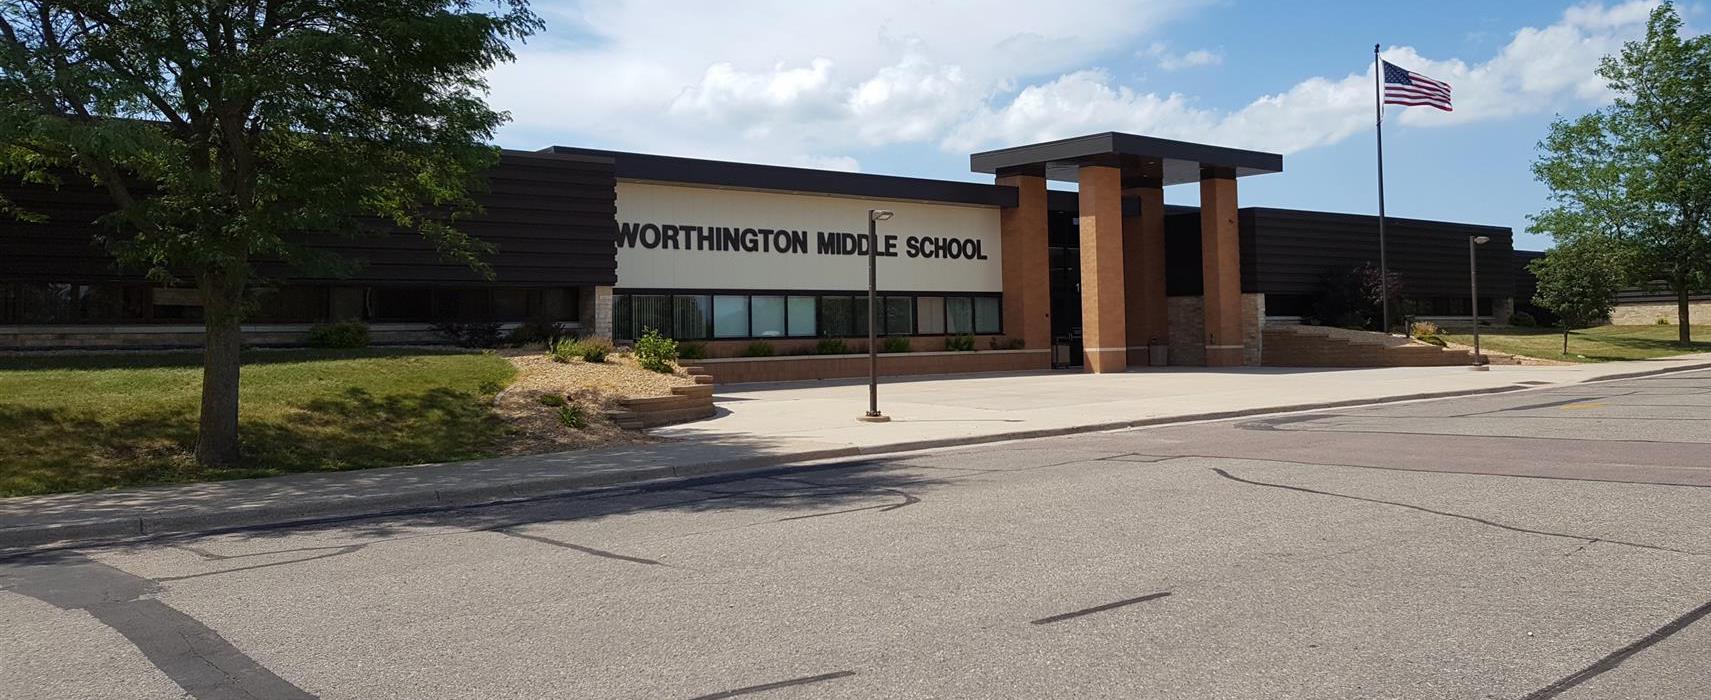 Worthington Middle School